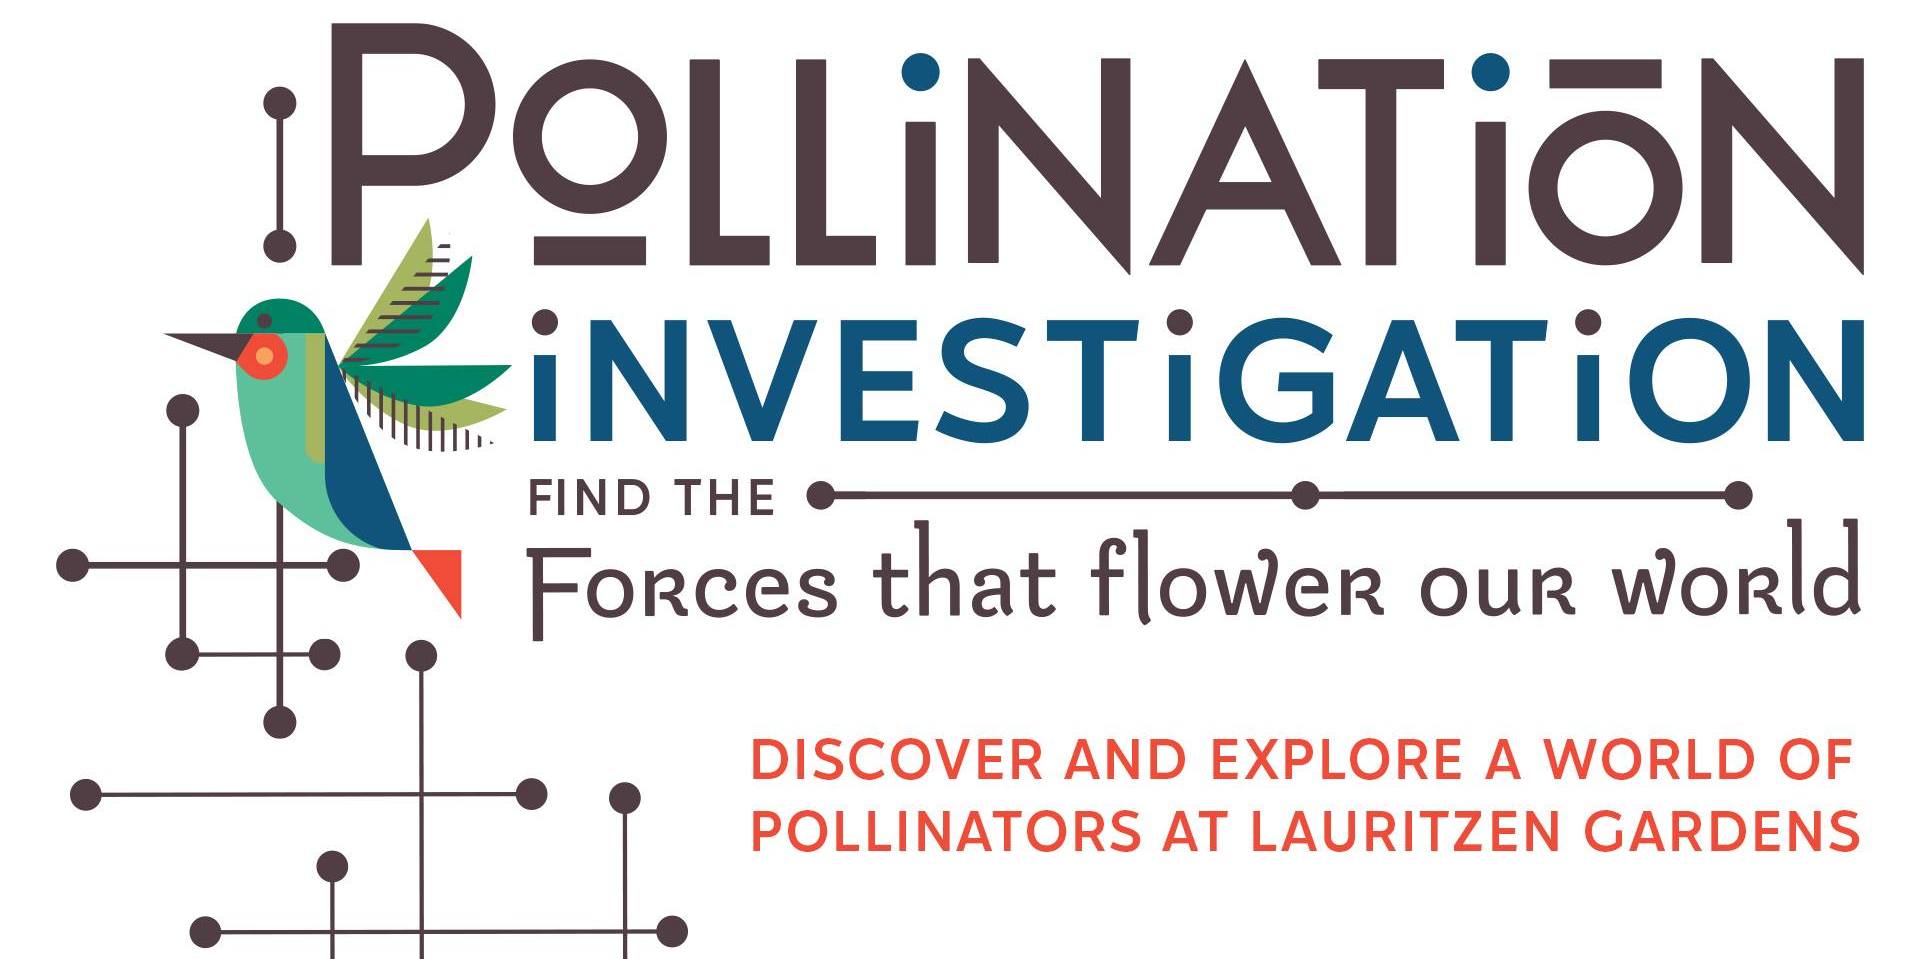 Pollination Investigation promotional image